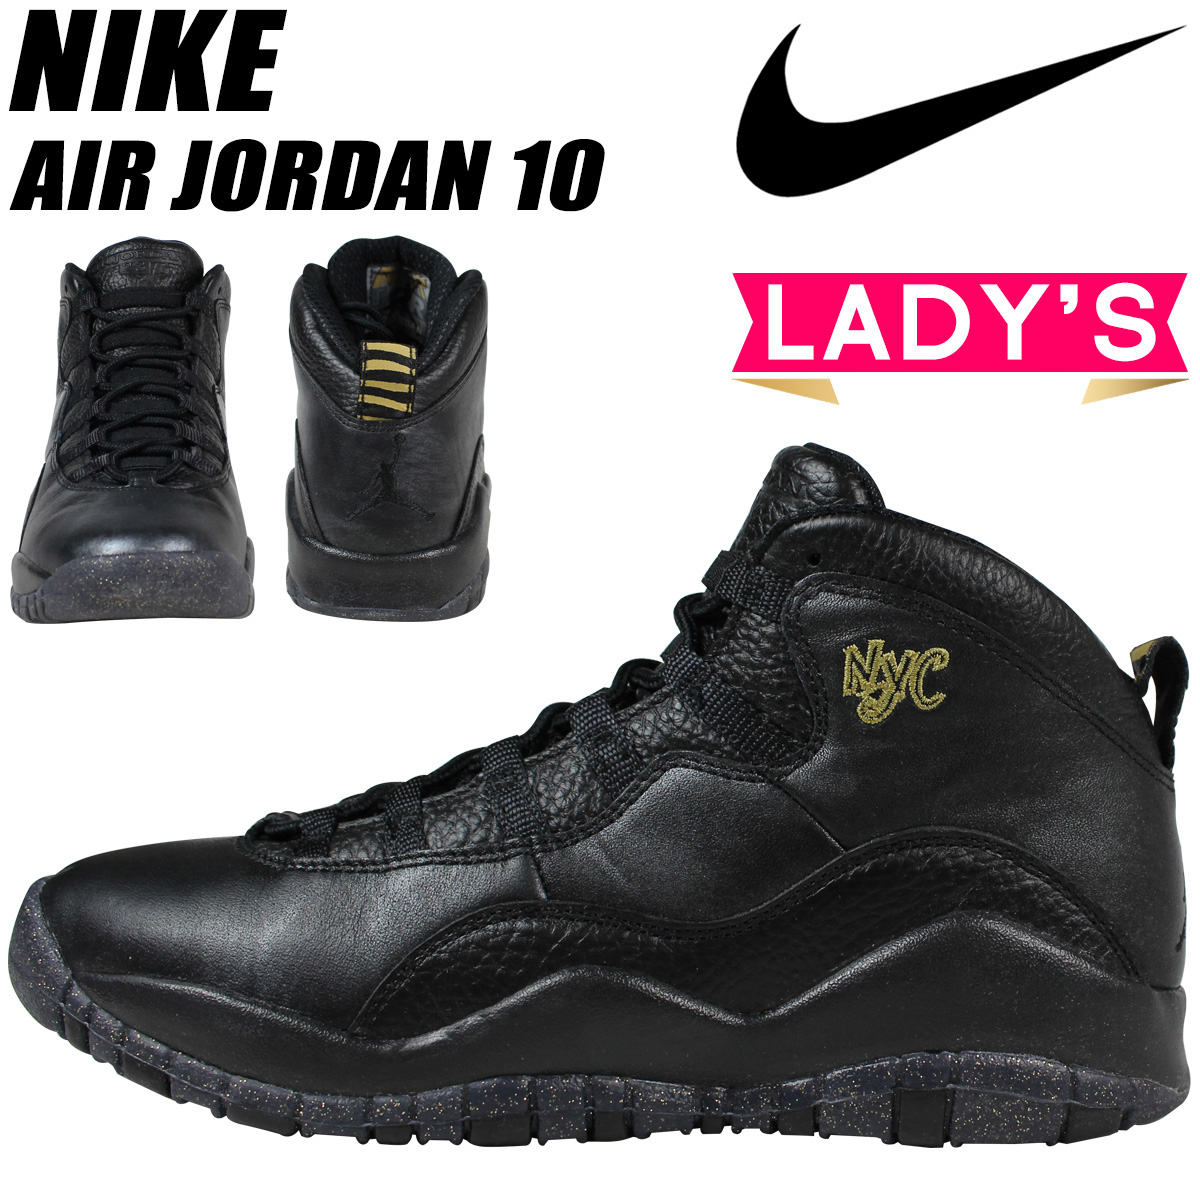 michael jordan 10 shoes